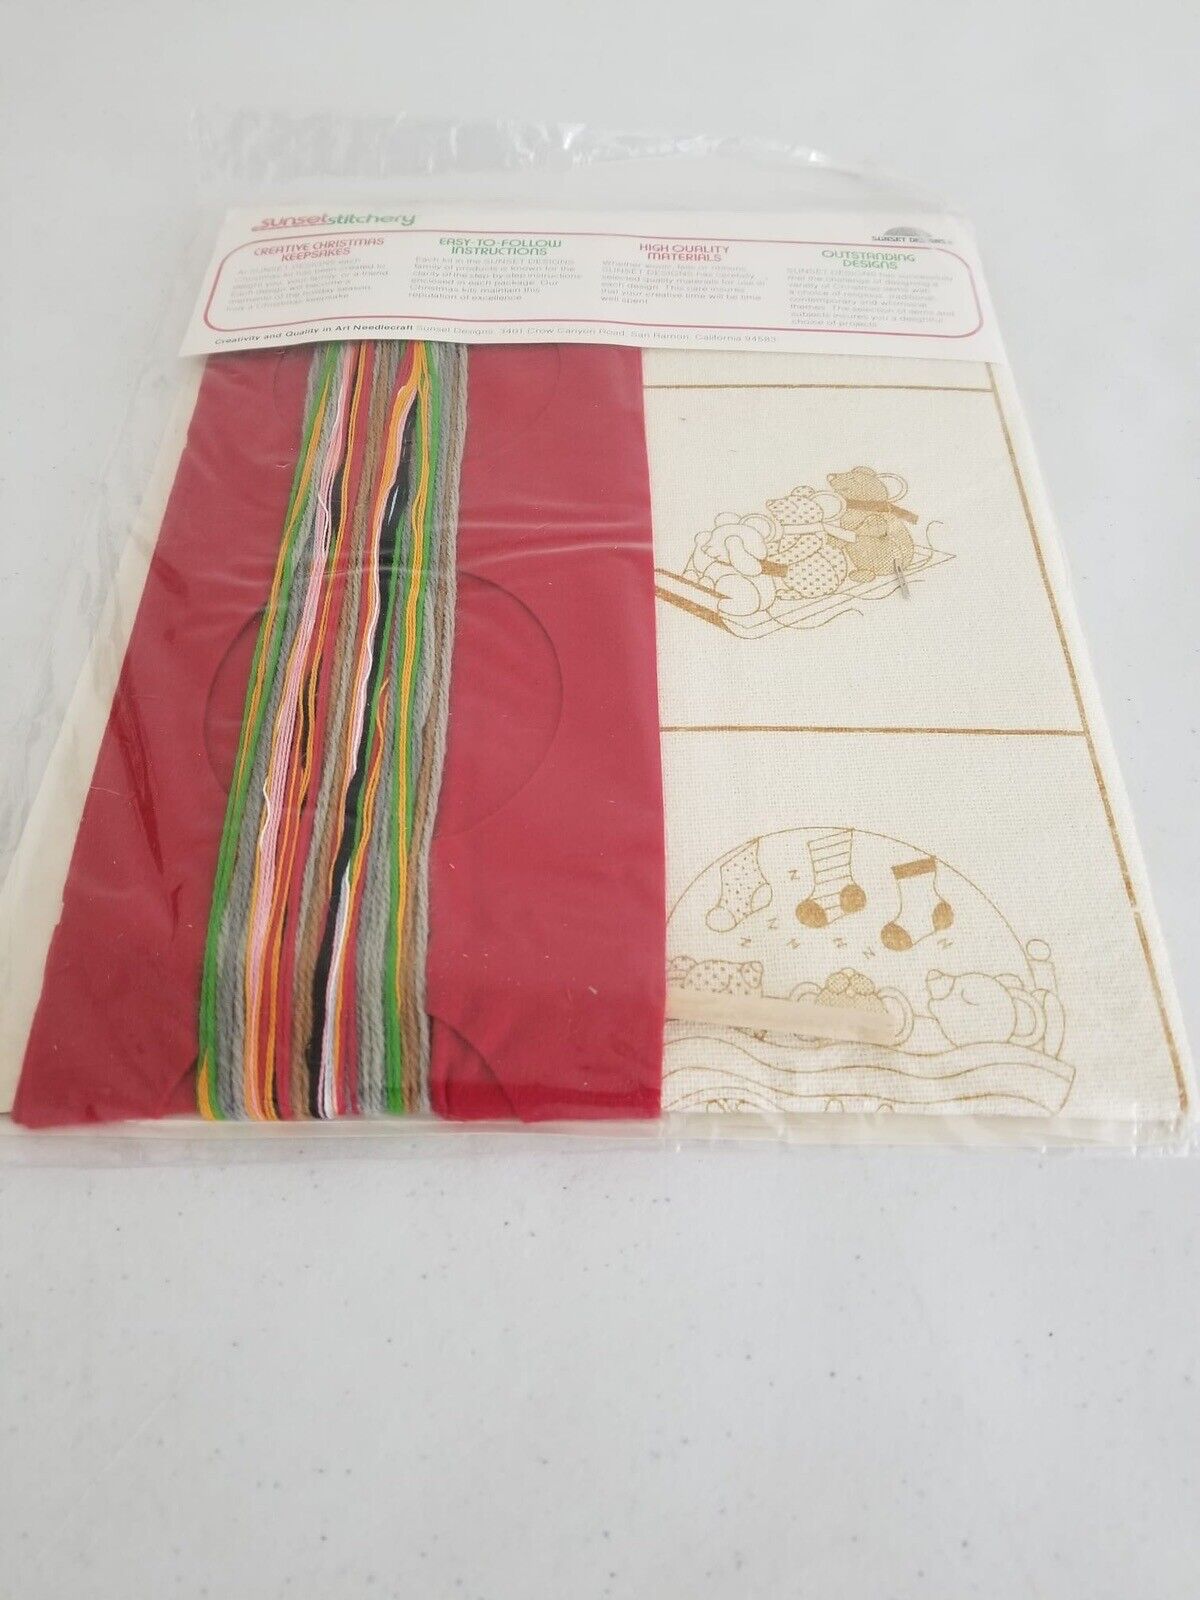 Vintage Sunset Stitchery Christmas Mice Banner Needlepoint Kit - Sealed Collectible - TreasuTiques